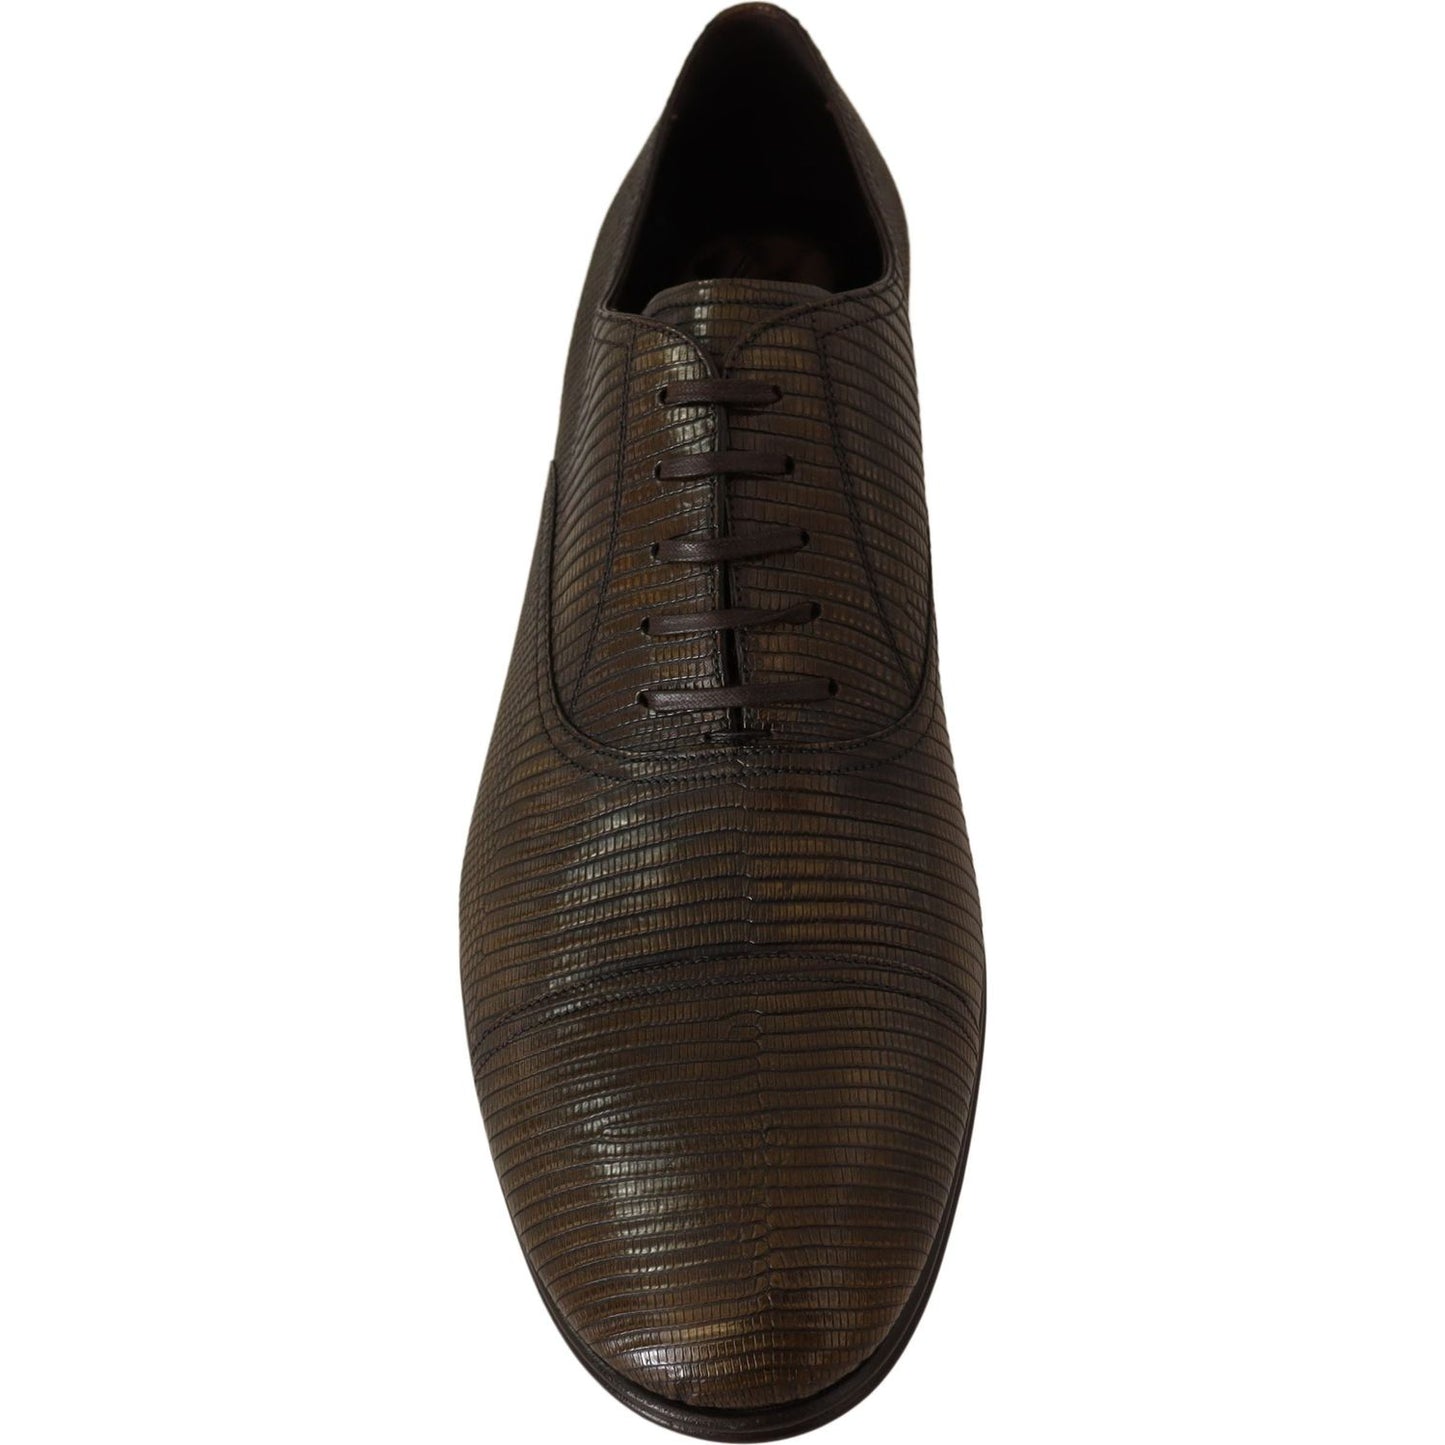 Dolce & Gabbana Elegant Shiny Leather Oxford Shoes brown-lizard-leather-dress-oxford-shoes Dress Shoes IMG_0051-scaled-fdf79c6d-258.jpg